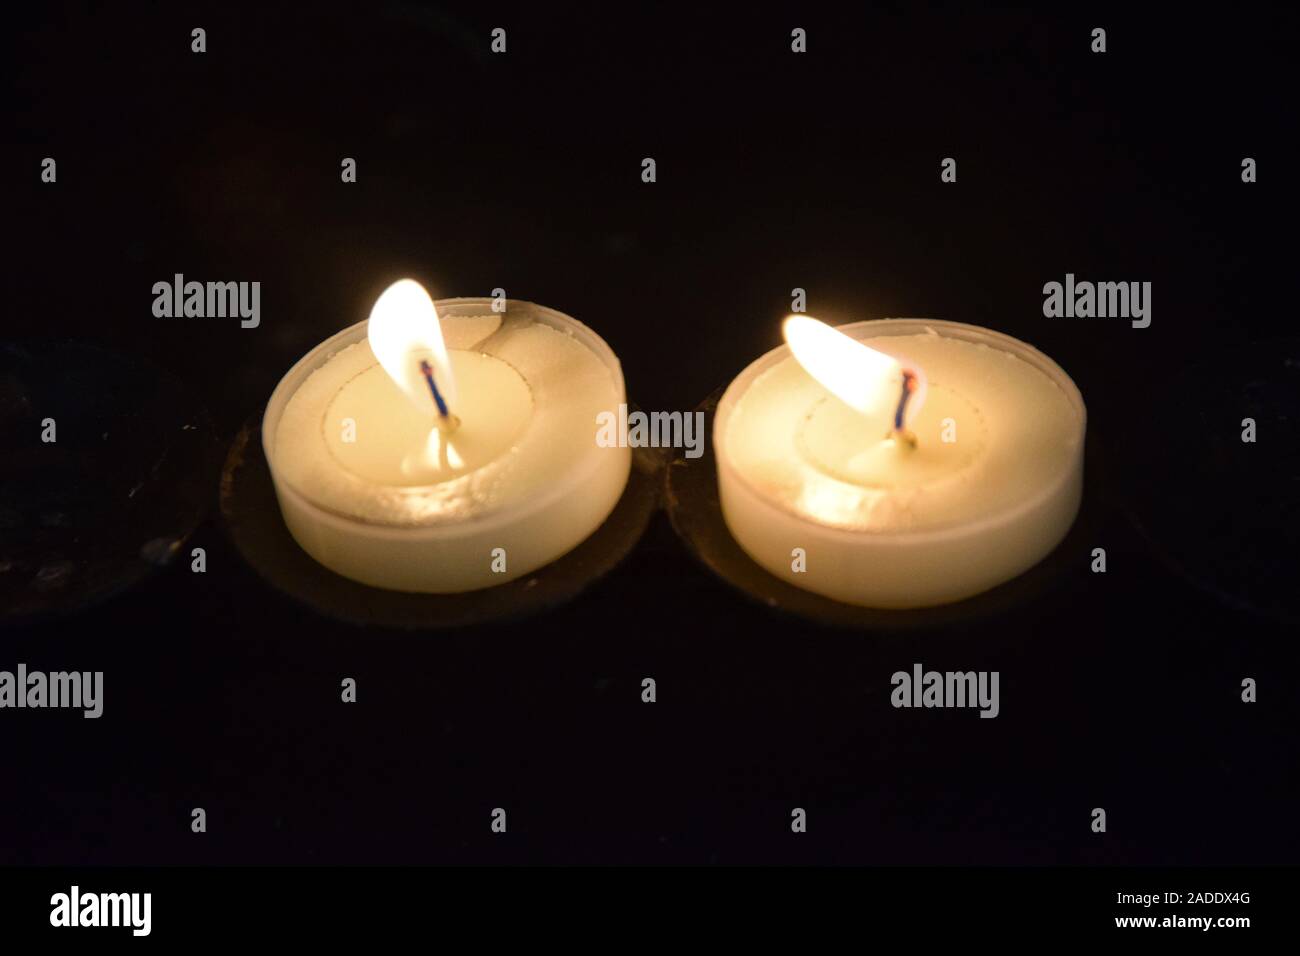 votive candles alight Stock Photo